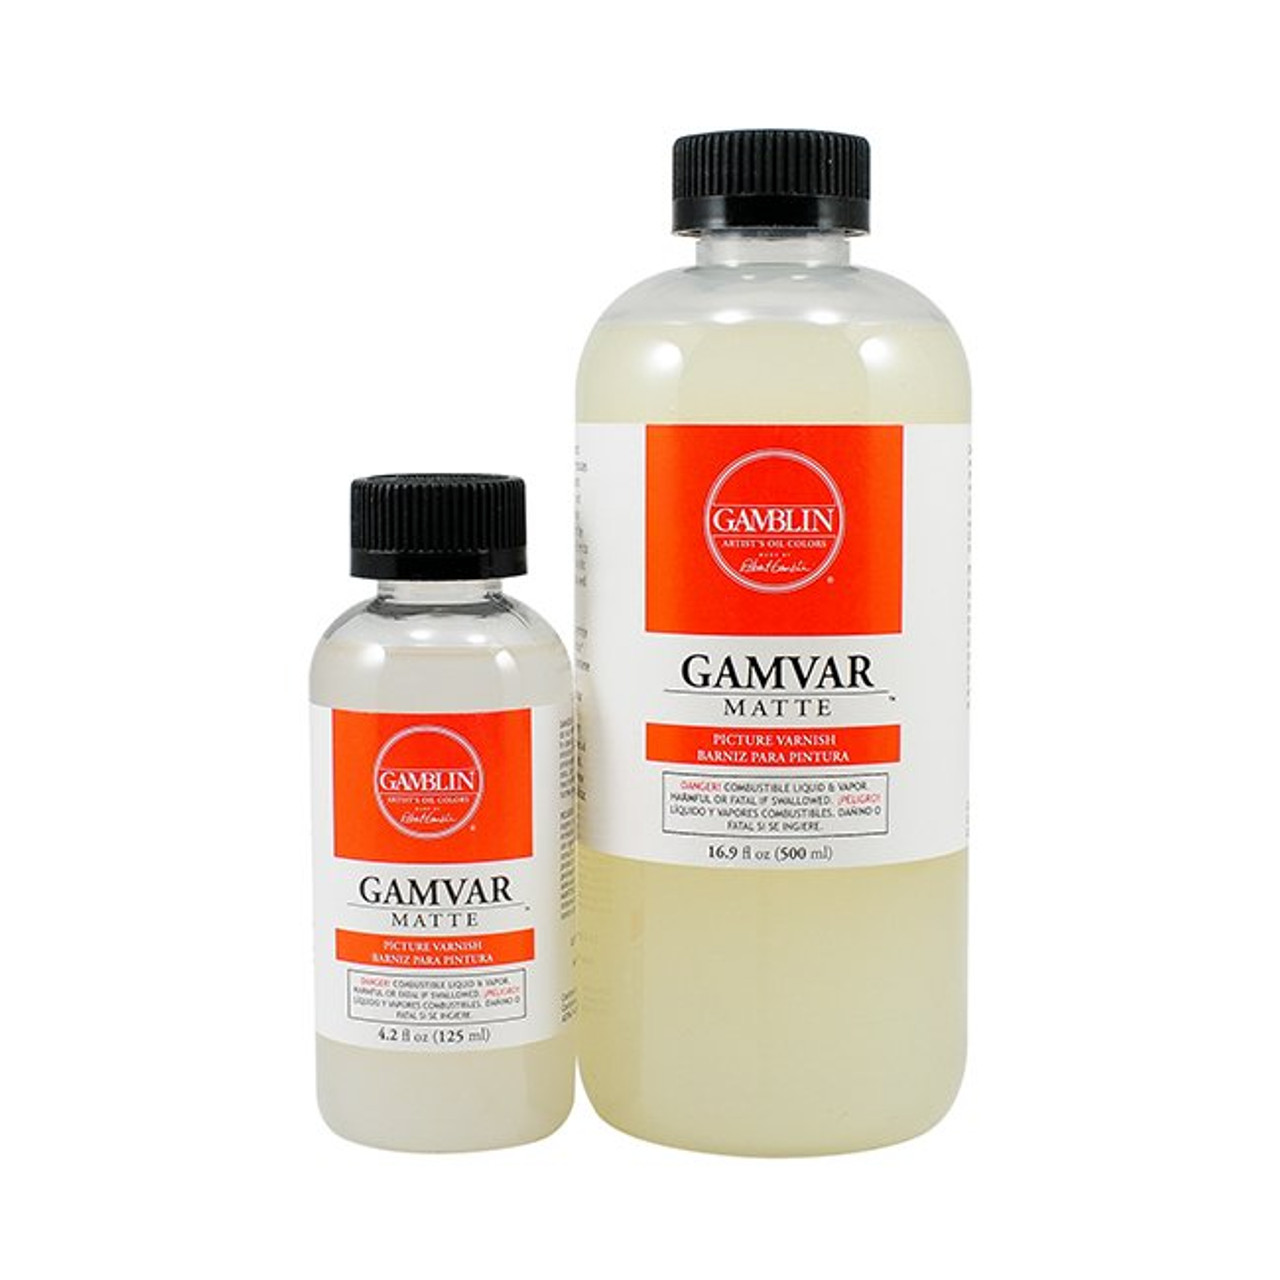 Gamblin Gamvar Matte Picture Varnish - Artist & Craftsman Supply